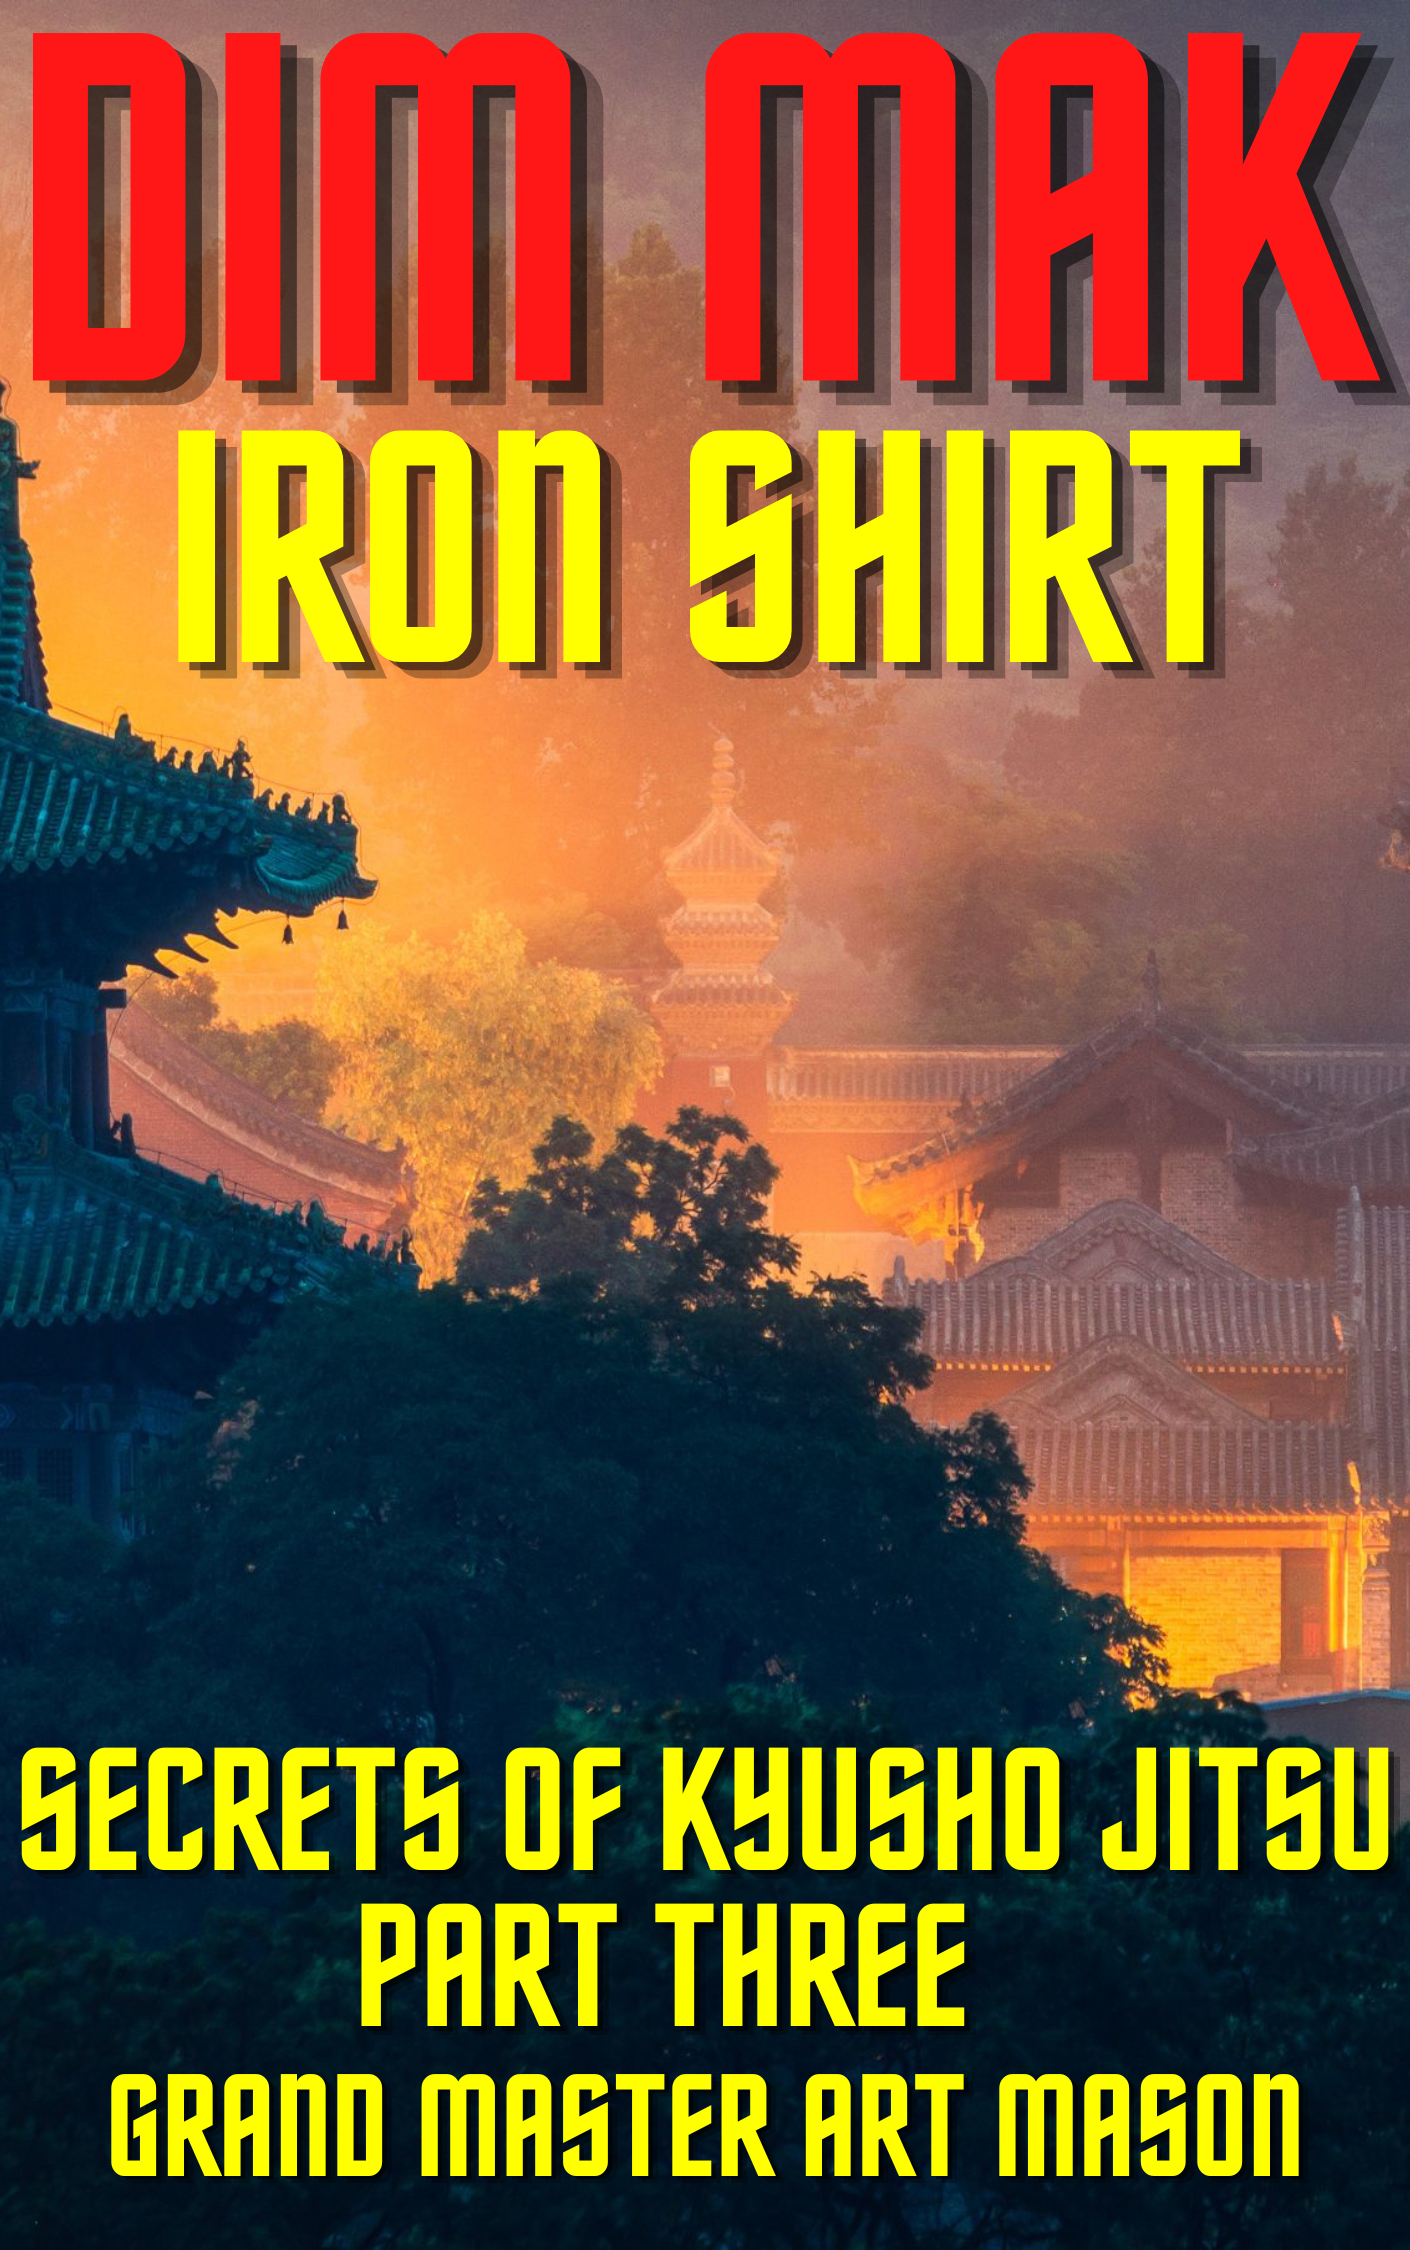 * Secrets of Kyusho Jitsu
Part Three - Dim Mak iron Shirt